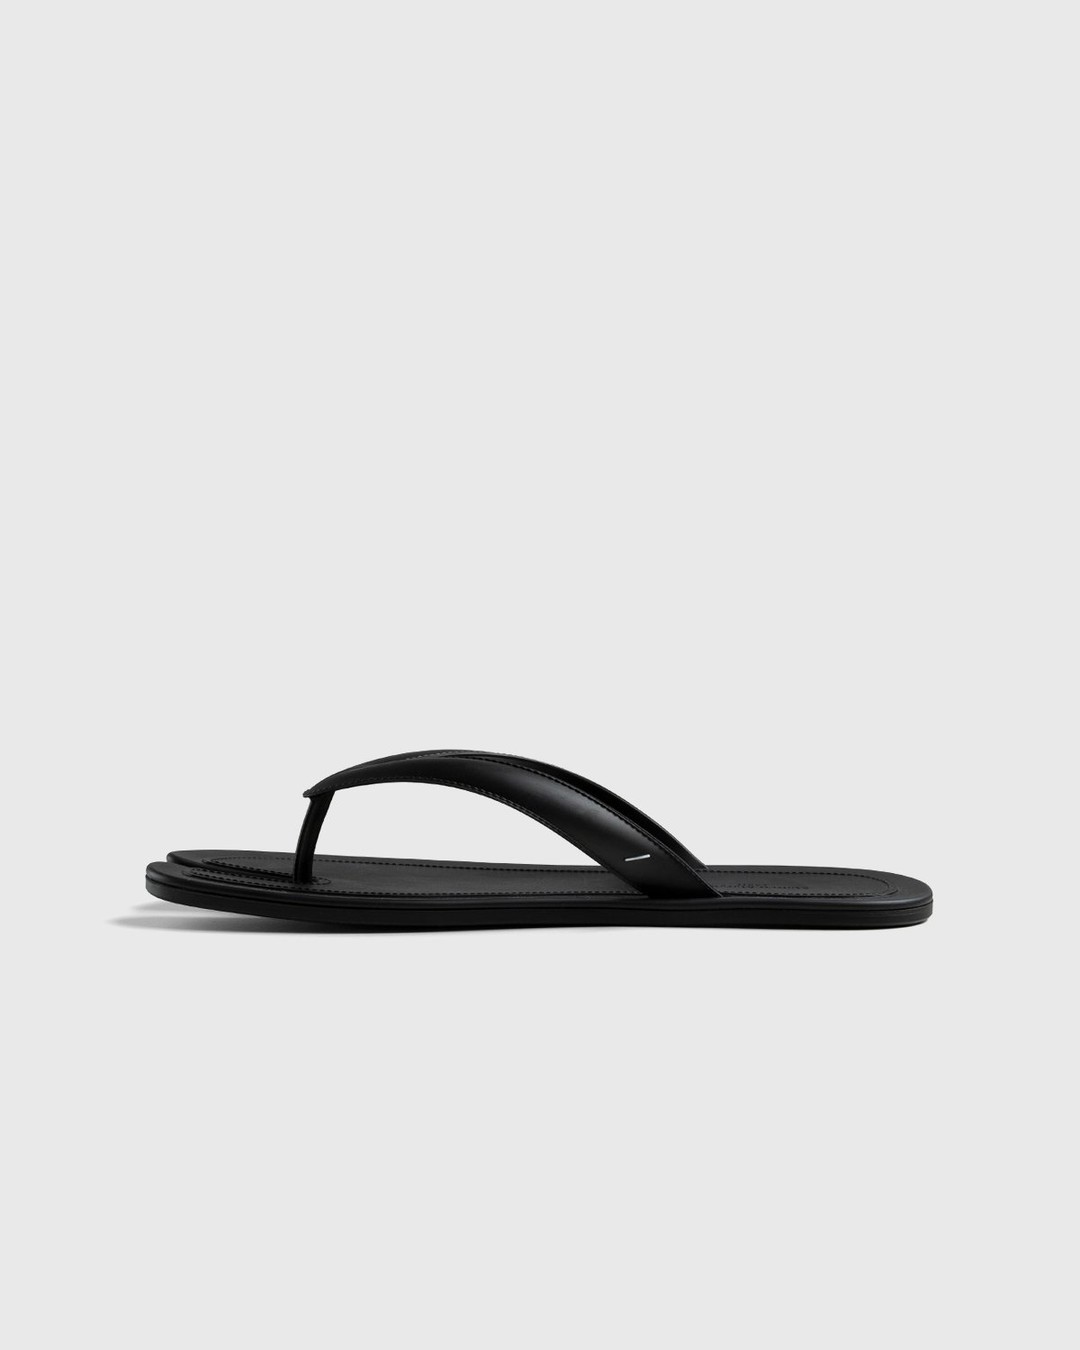 Maison Margiela – Tabi Flip-Flops Black - Sandals - Black - Image 3